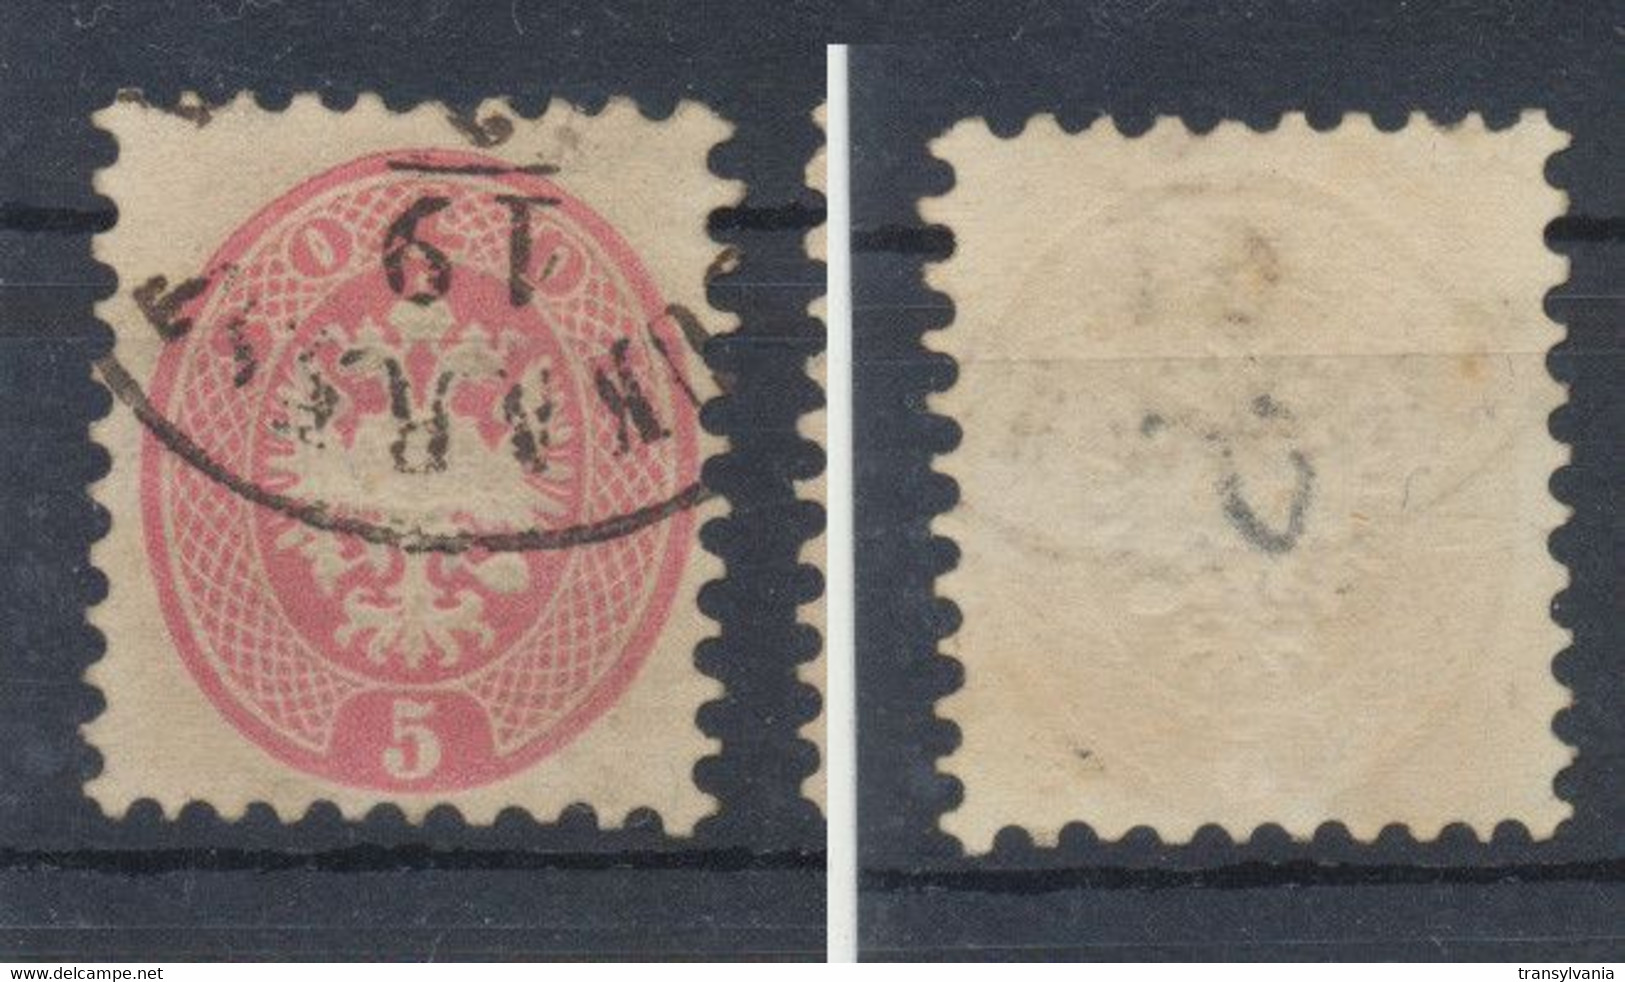 Romania 1864 Austria Post In Levant 5 Kreuzer Stamp With Bukarest Rekomandirt Cancellation Applied At Bucuresti - Occupazione